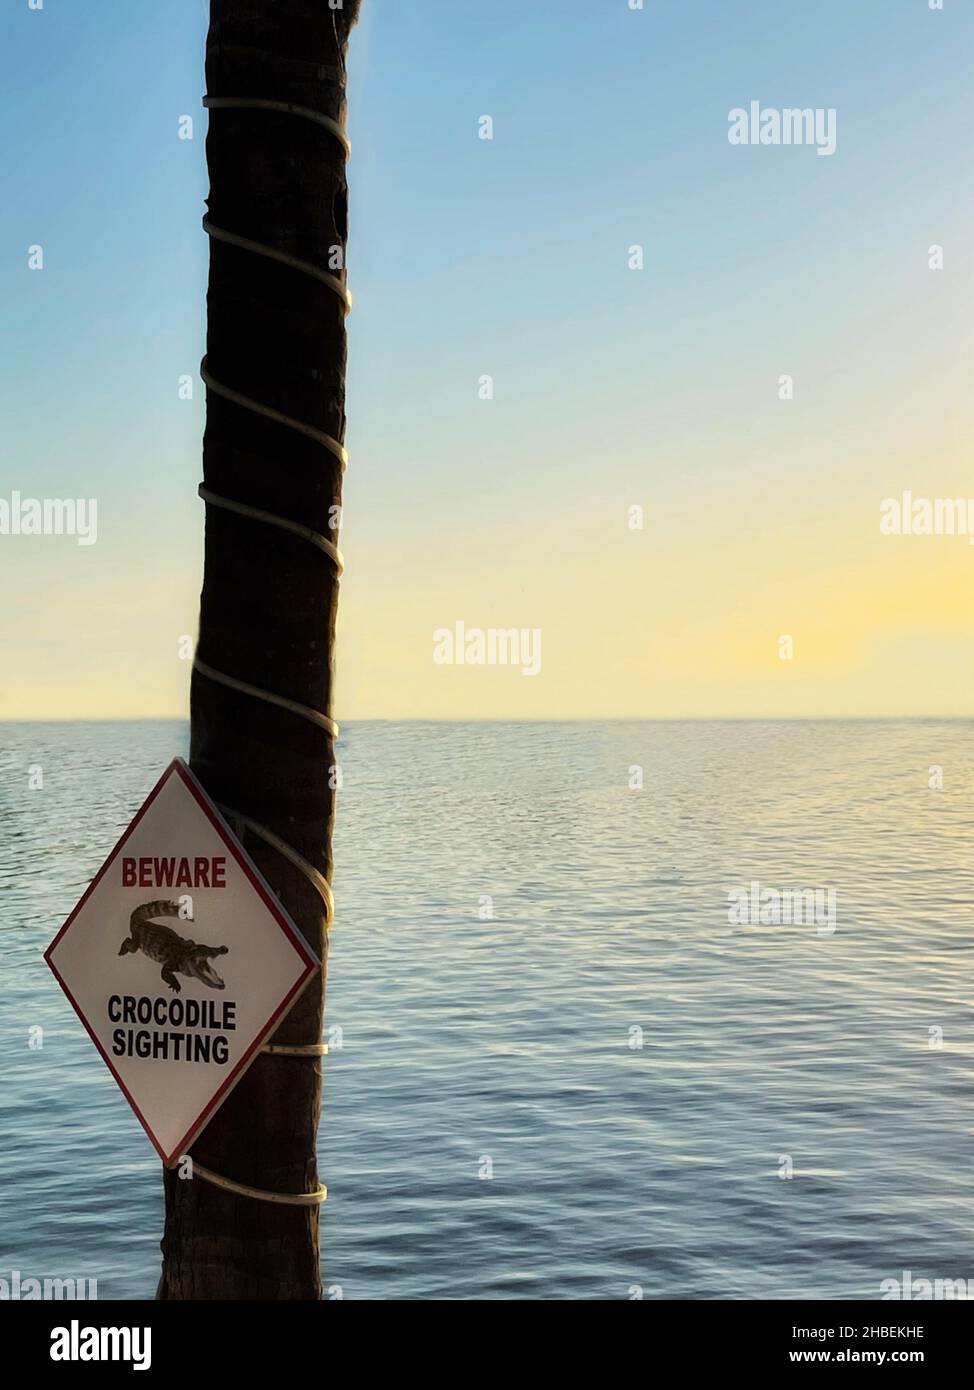 Beware crocodile sighting sign on a tree, Islamorada, Florida Keys, Florida, USA Stock Photo